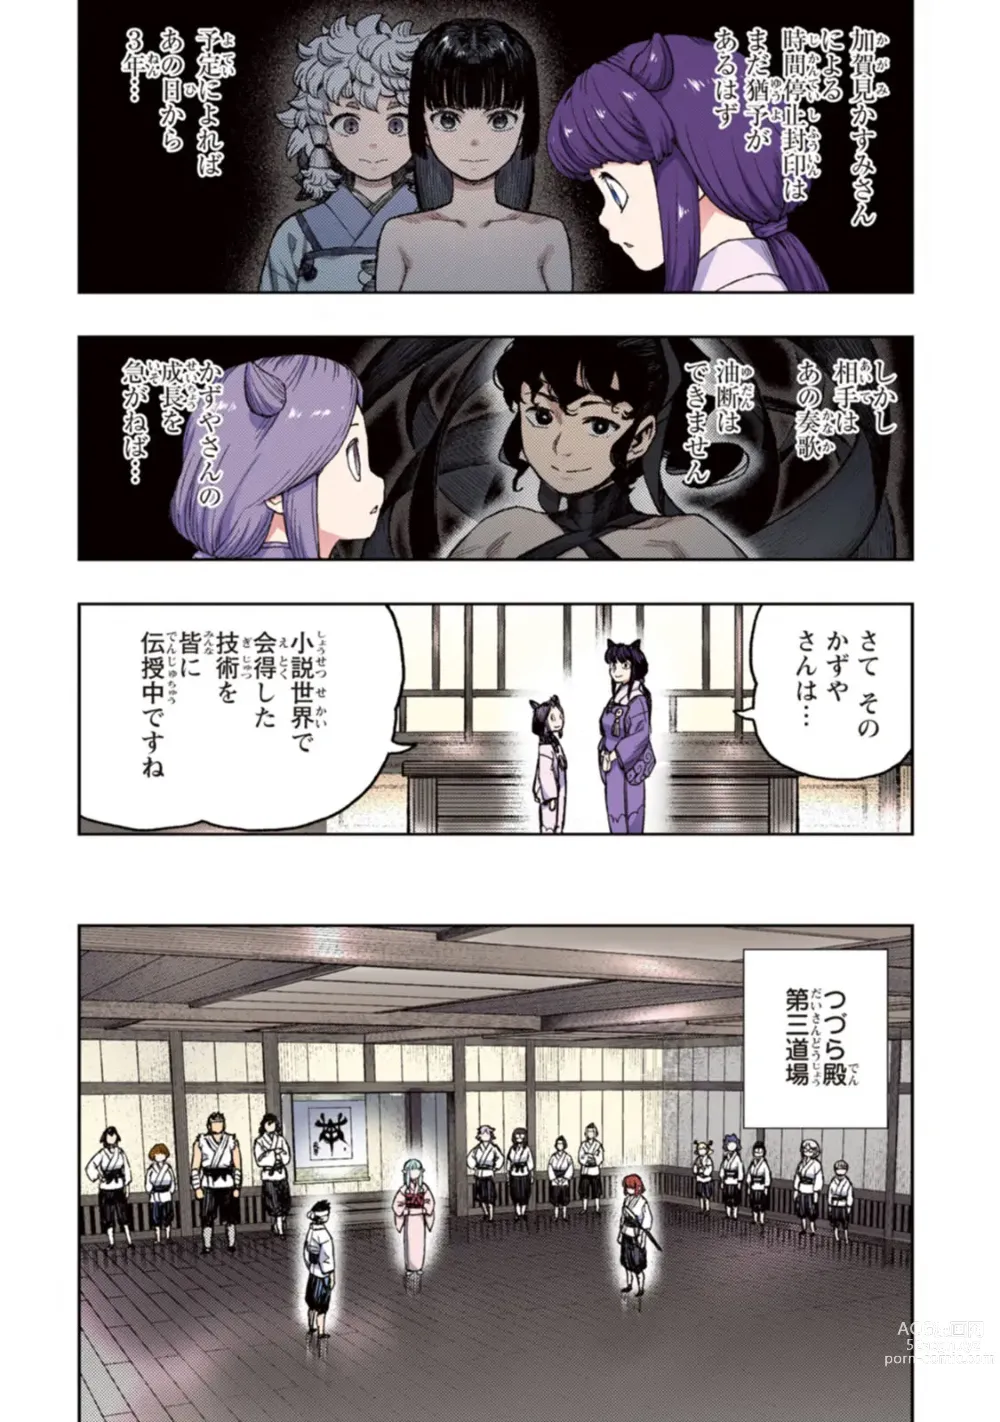 Page 13 of manga Tsugumomo Full Color Kan